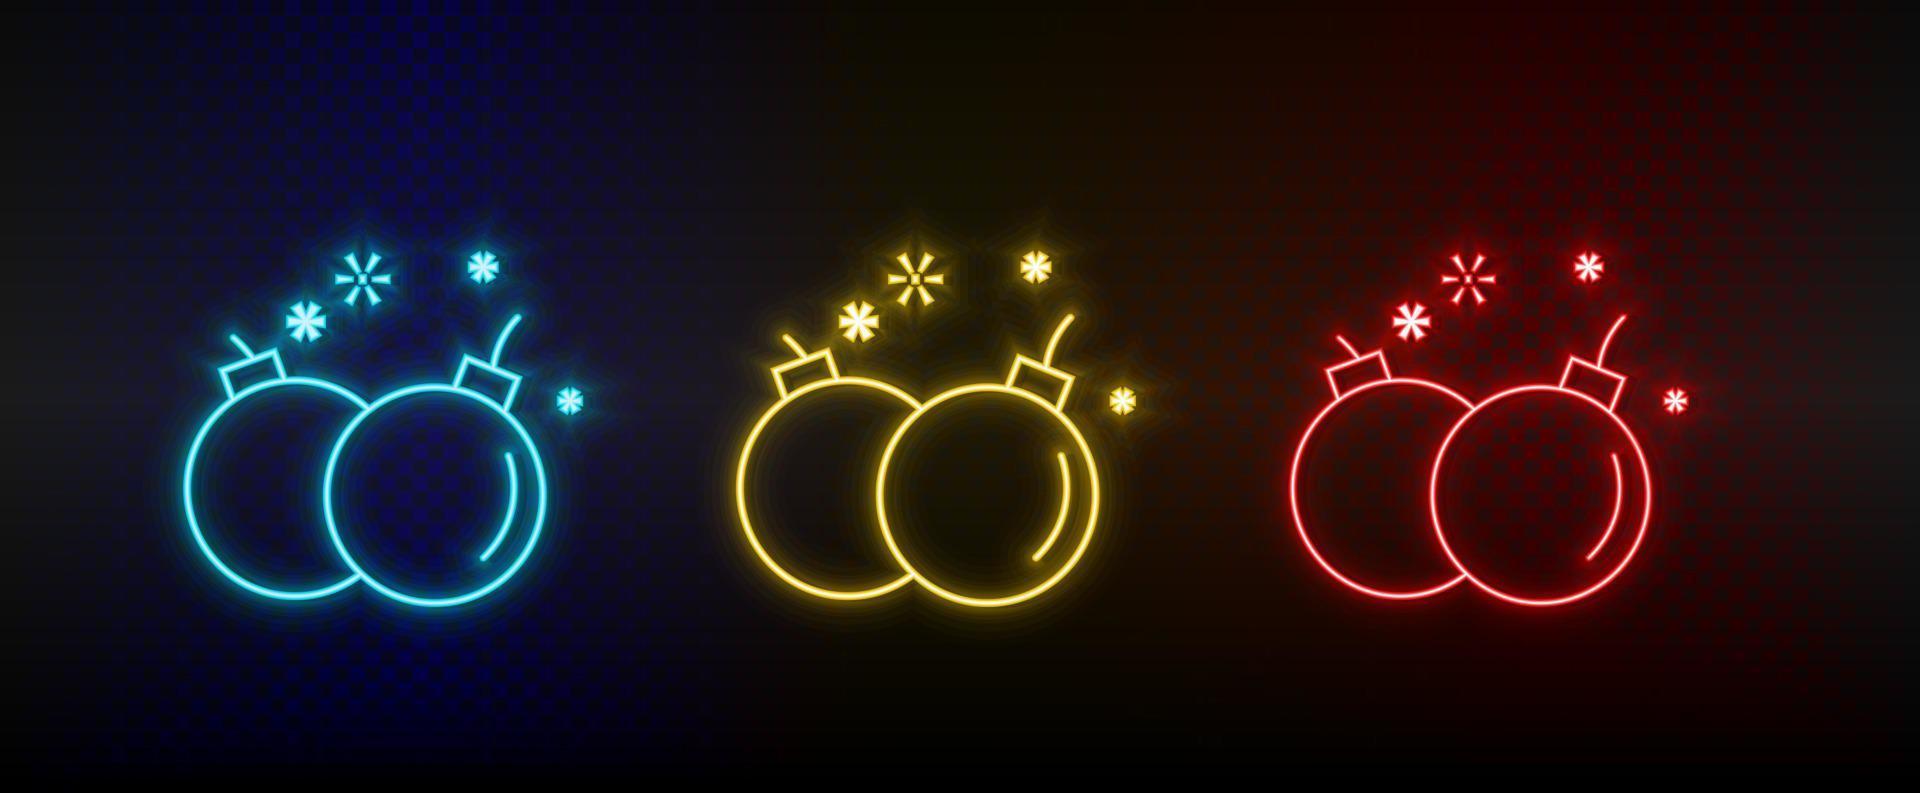 Neon icons. Bomb weapons detonation retro arcade. Set of red, blue, yellow neon vector icon on darken background